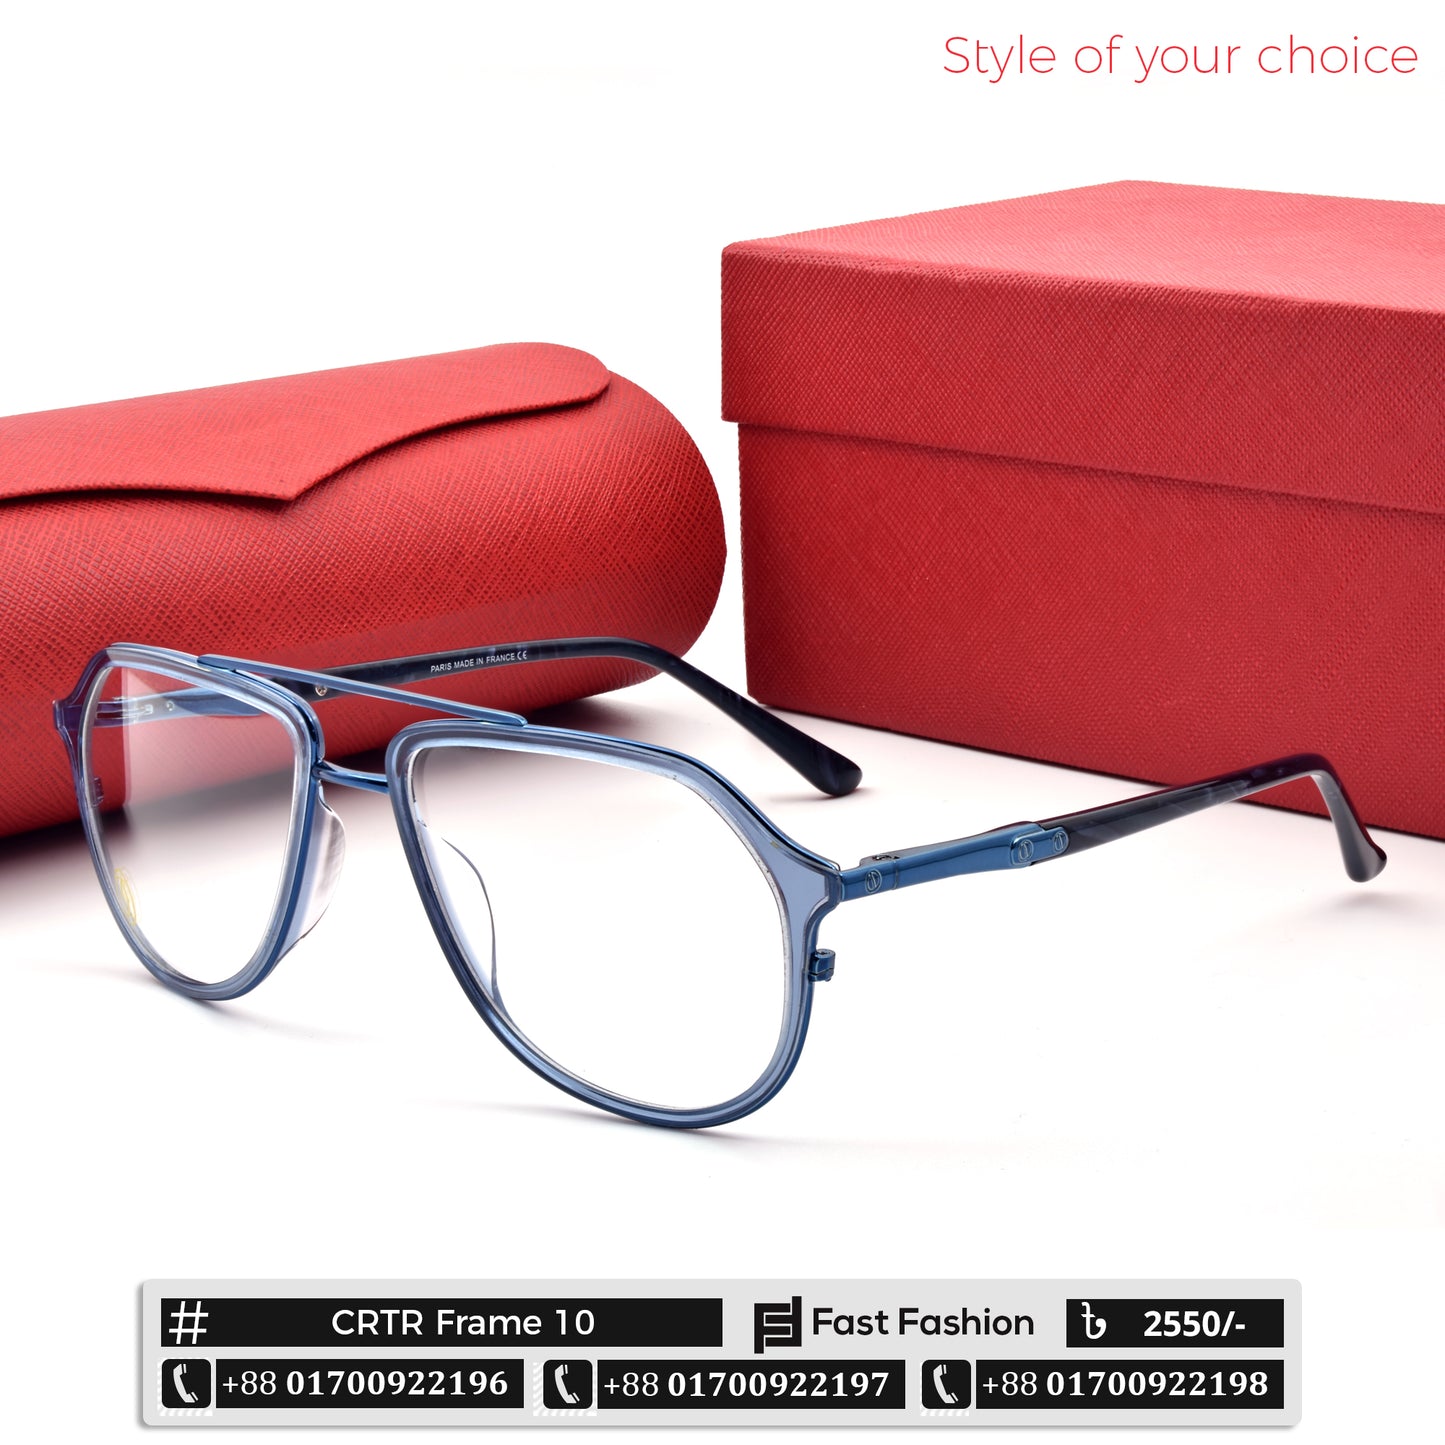 Modern Looking Trendy Stylish Optic Frame | CRTR Frame 10 | Premium Quality